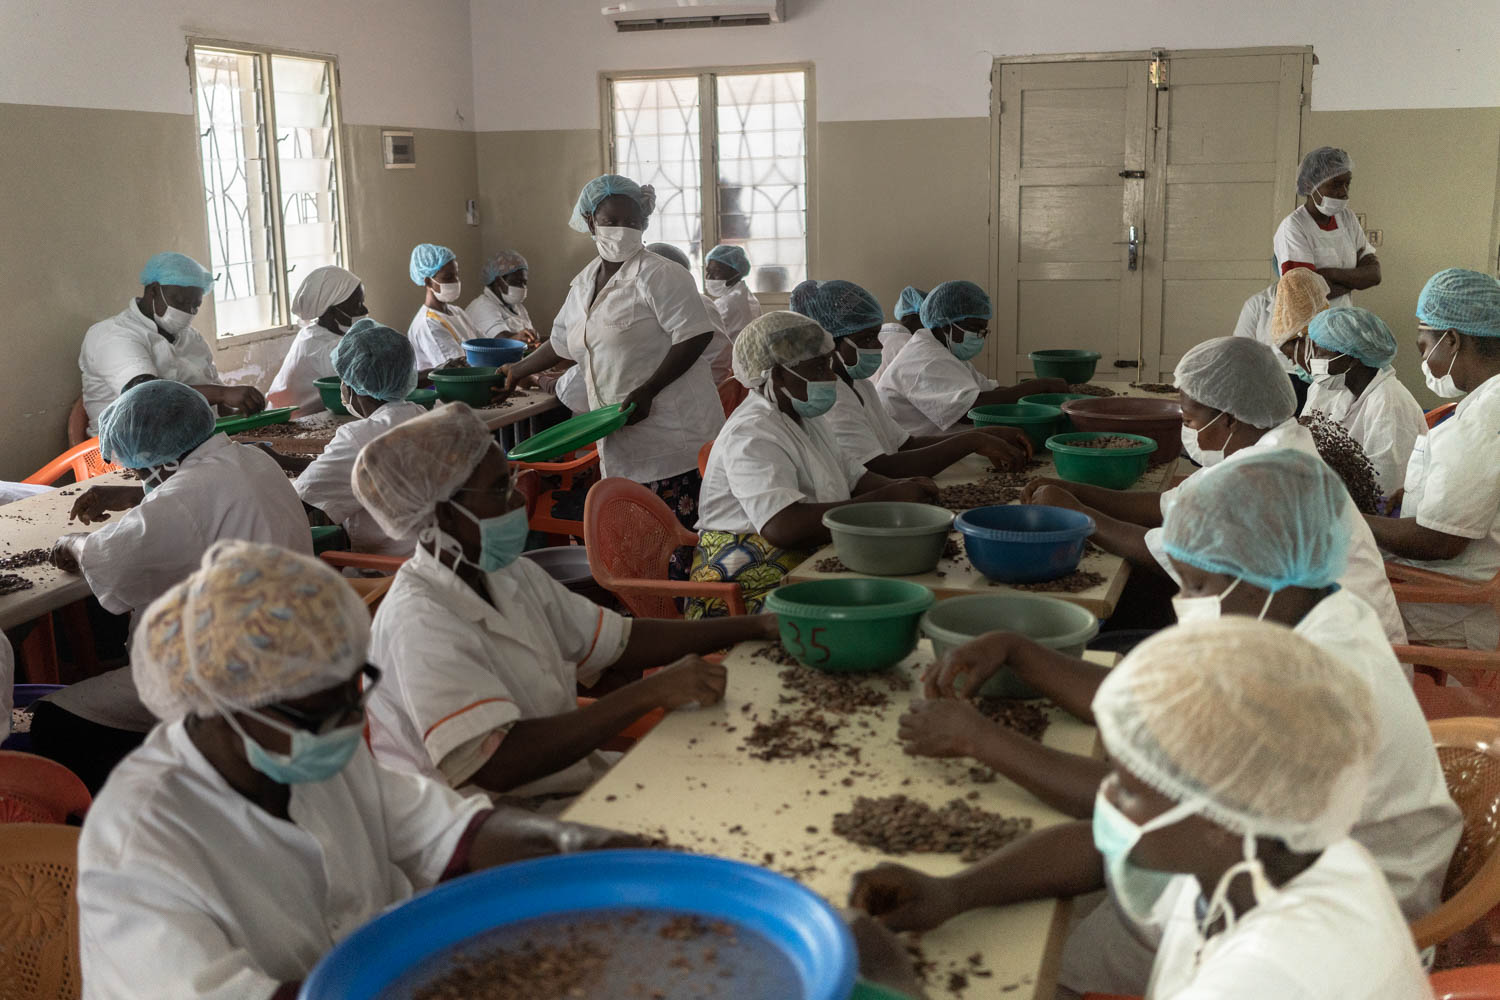 60 women break cocoa beans at Kpalimé's headquarters in Choco Togo.